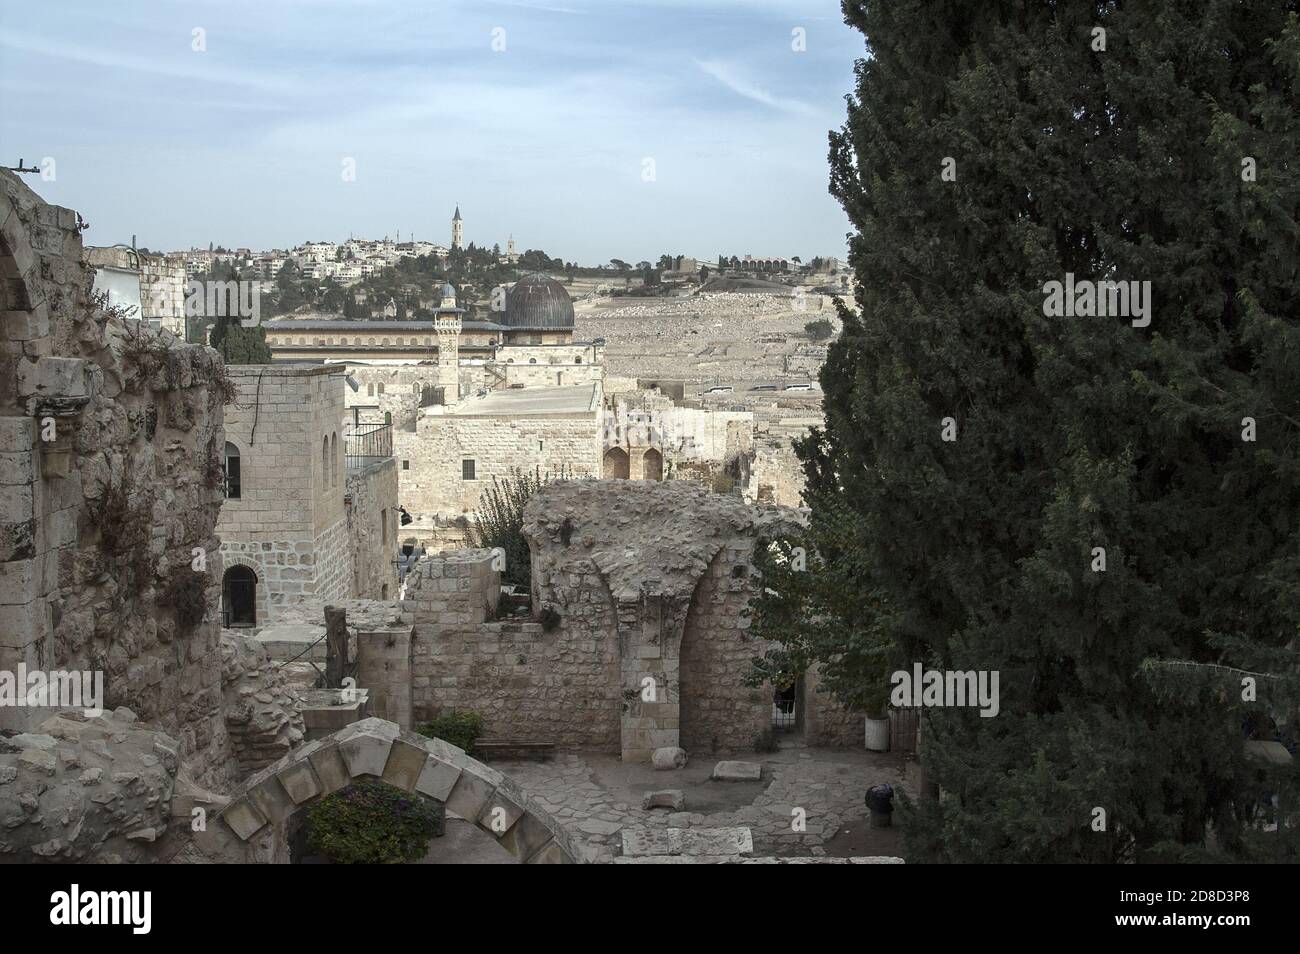 ירושלים, Gerusalemme, القدس, Jerozolima, Israele, Izrael, ישראל; veduta del Monte degli Ulivi dalle rovine della città vecchia. Foto Stock